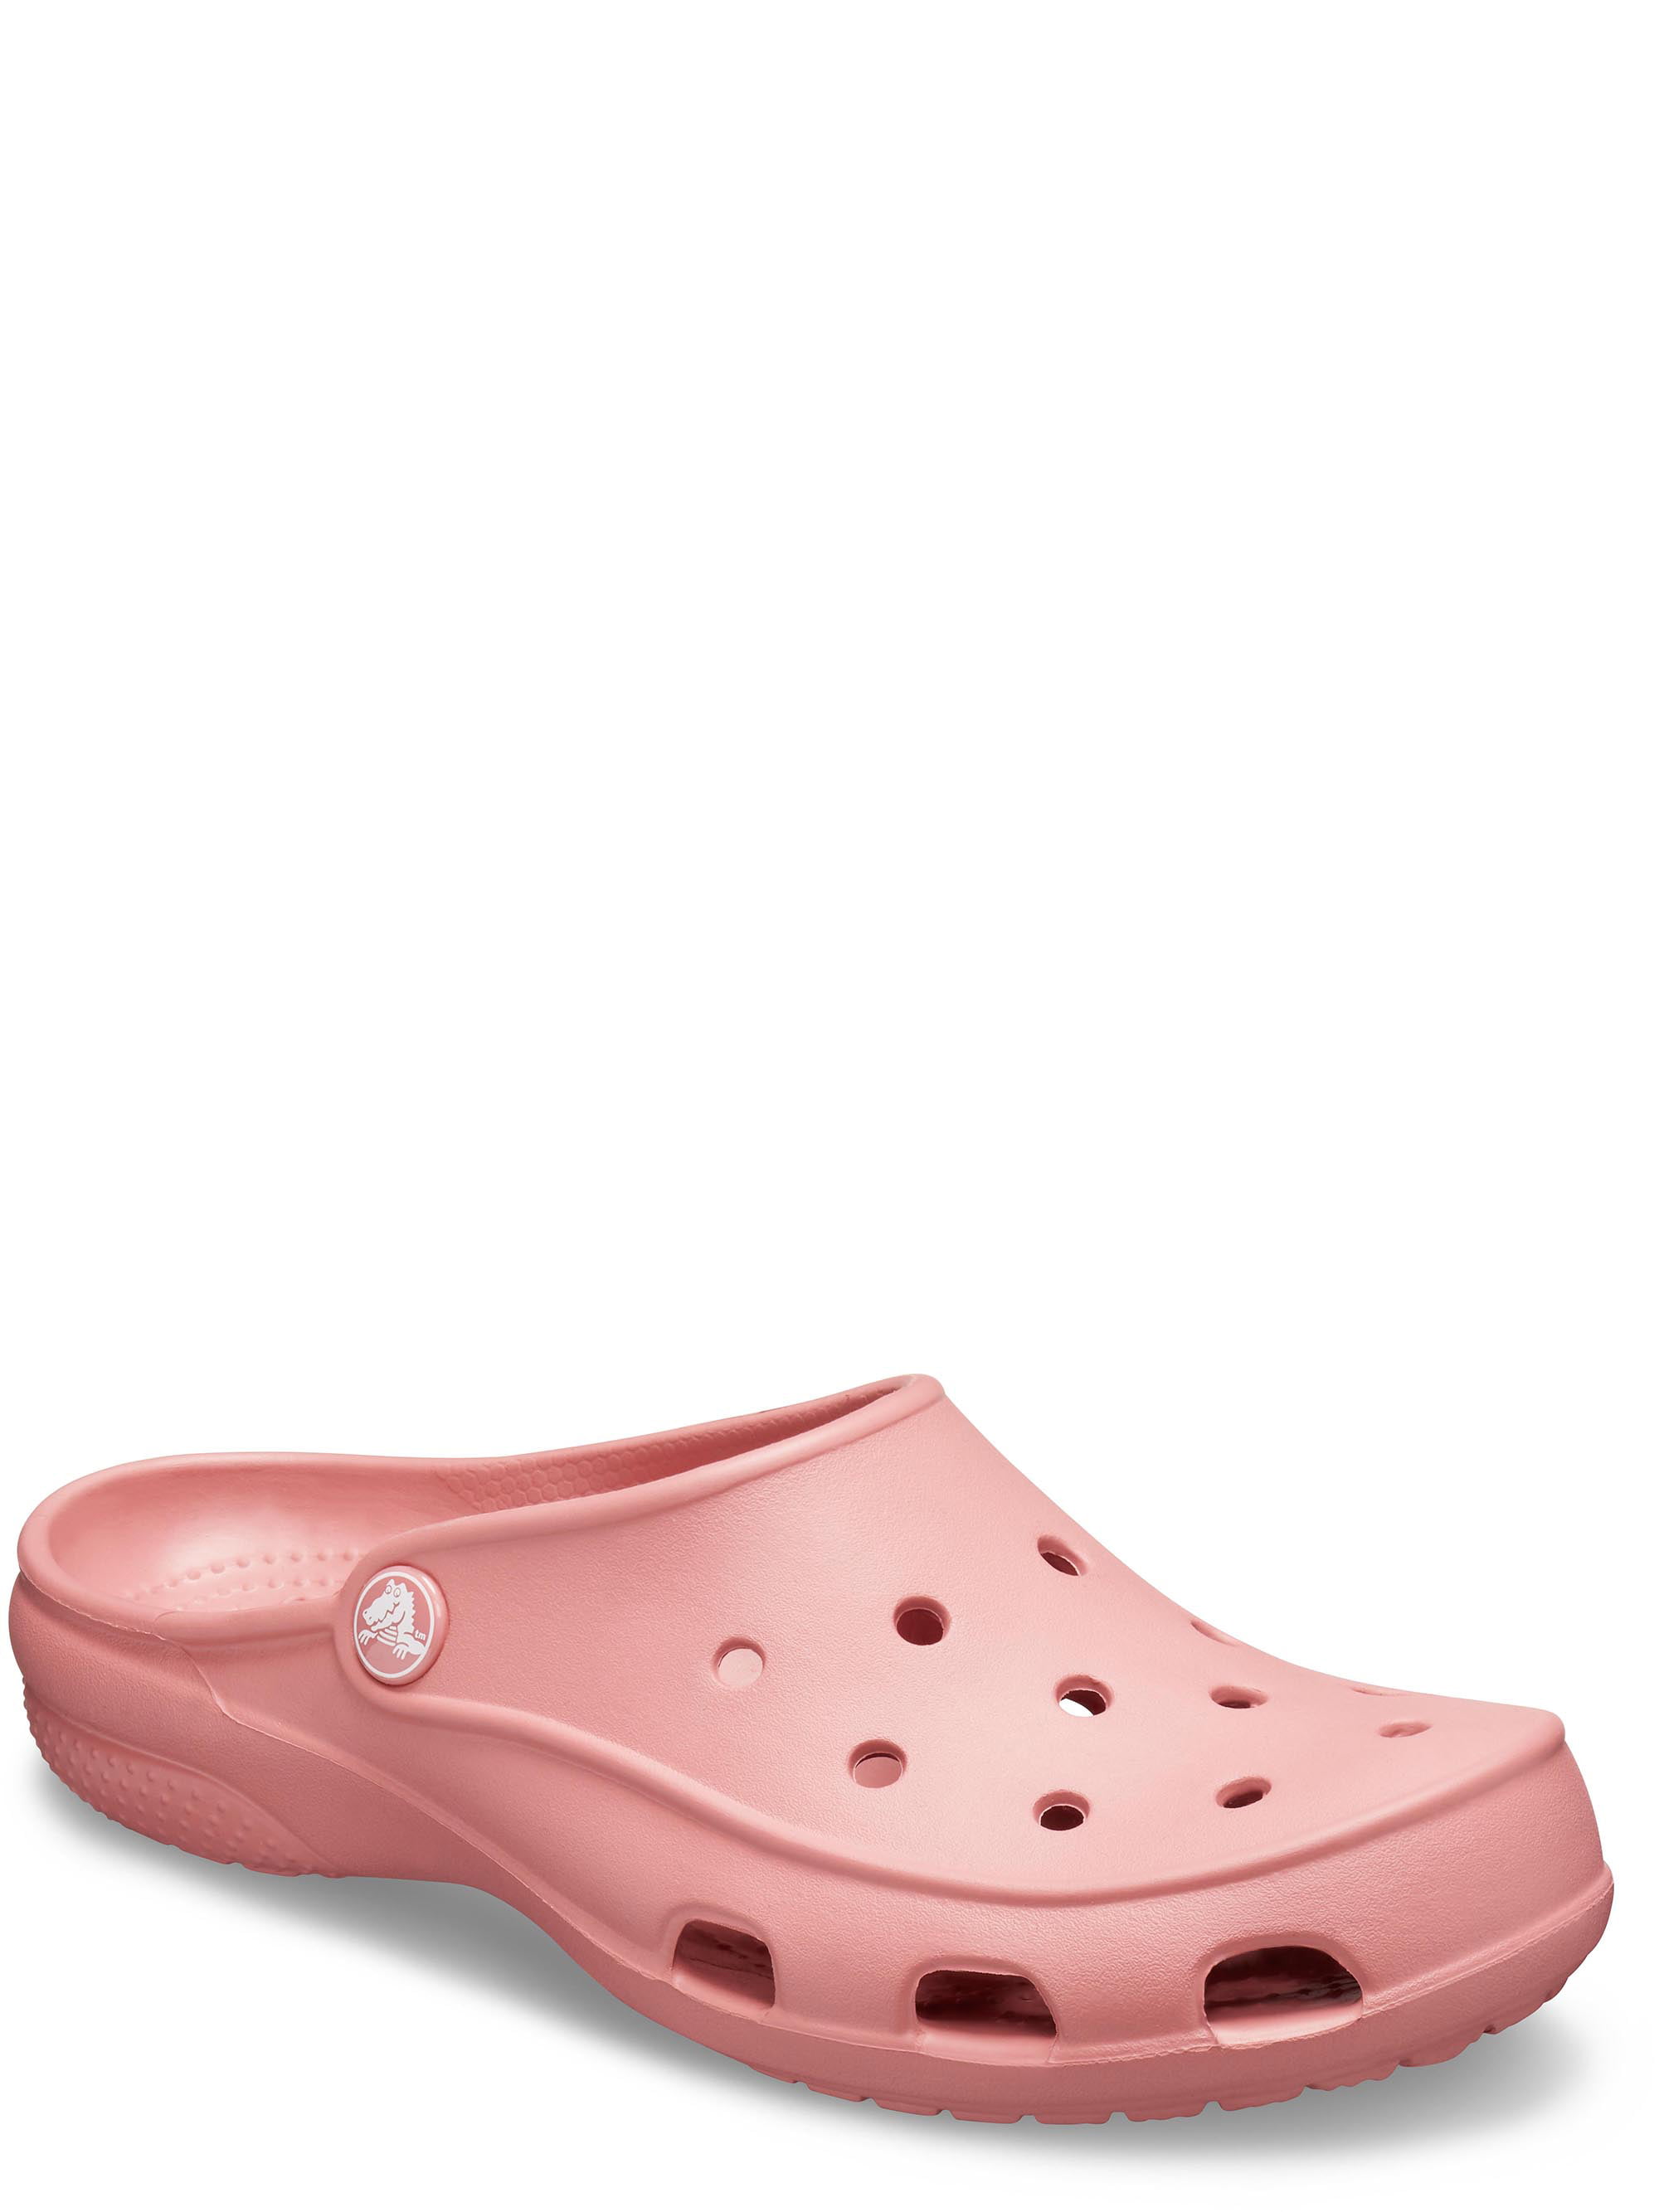 Crocs - Crocs Women's Freesail Clogs 